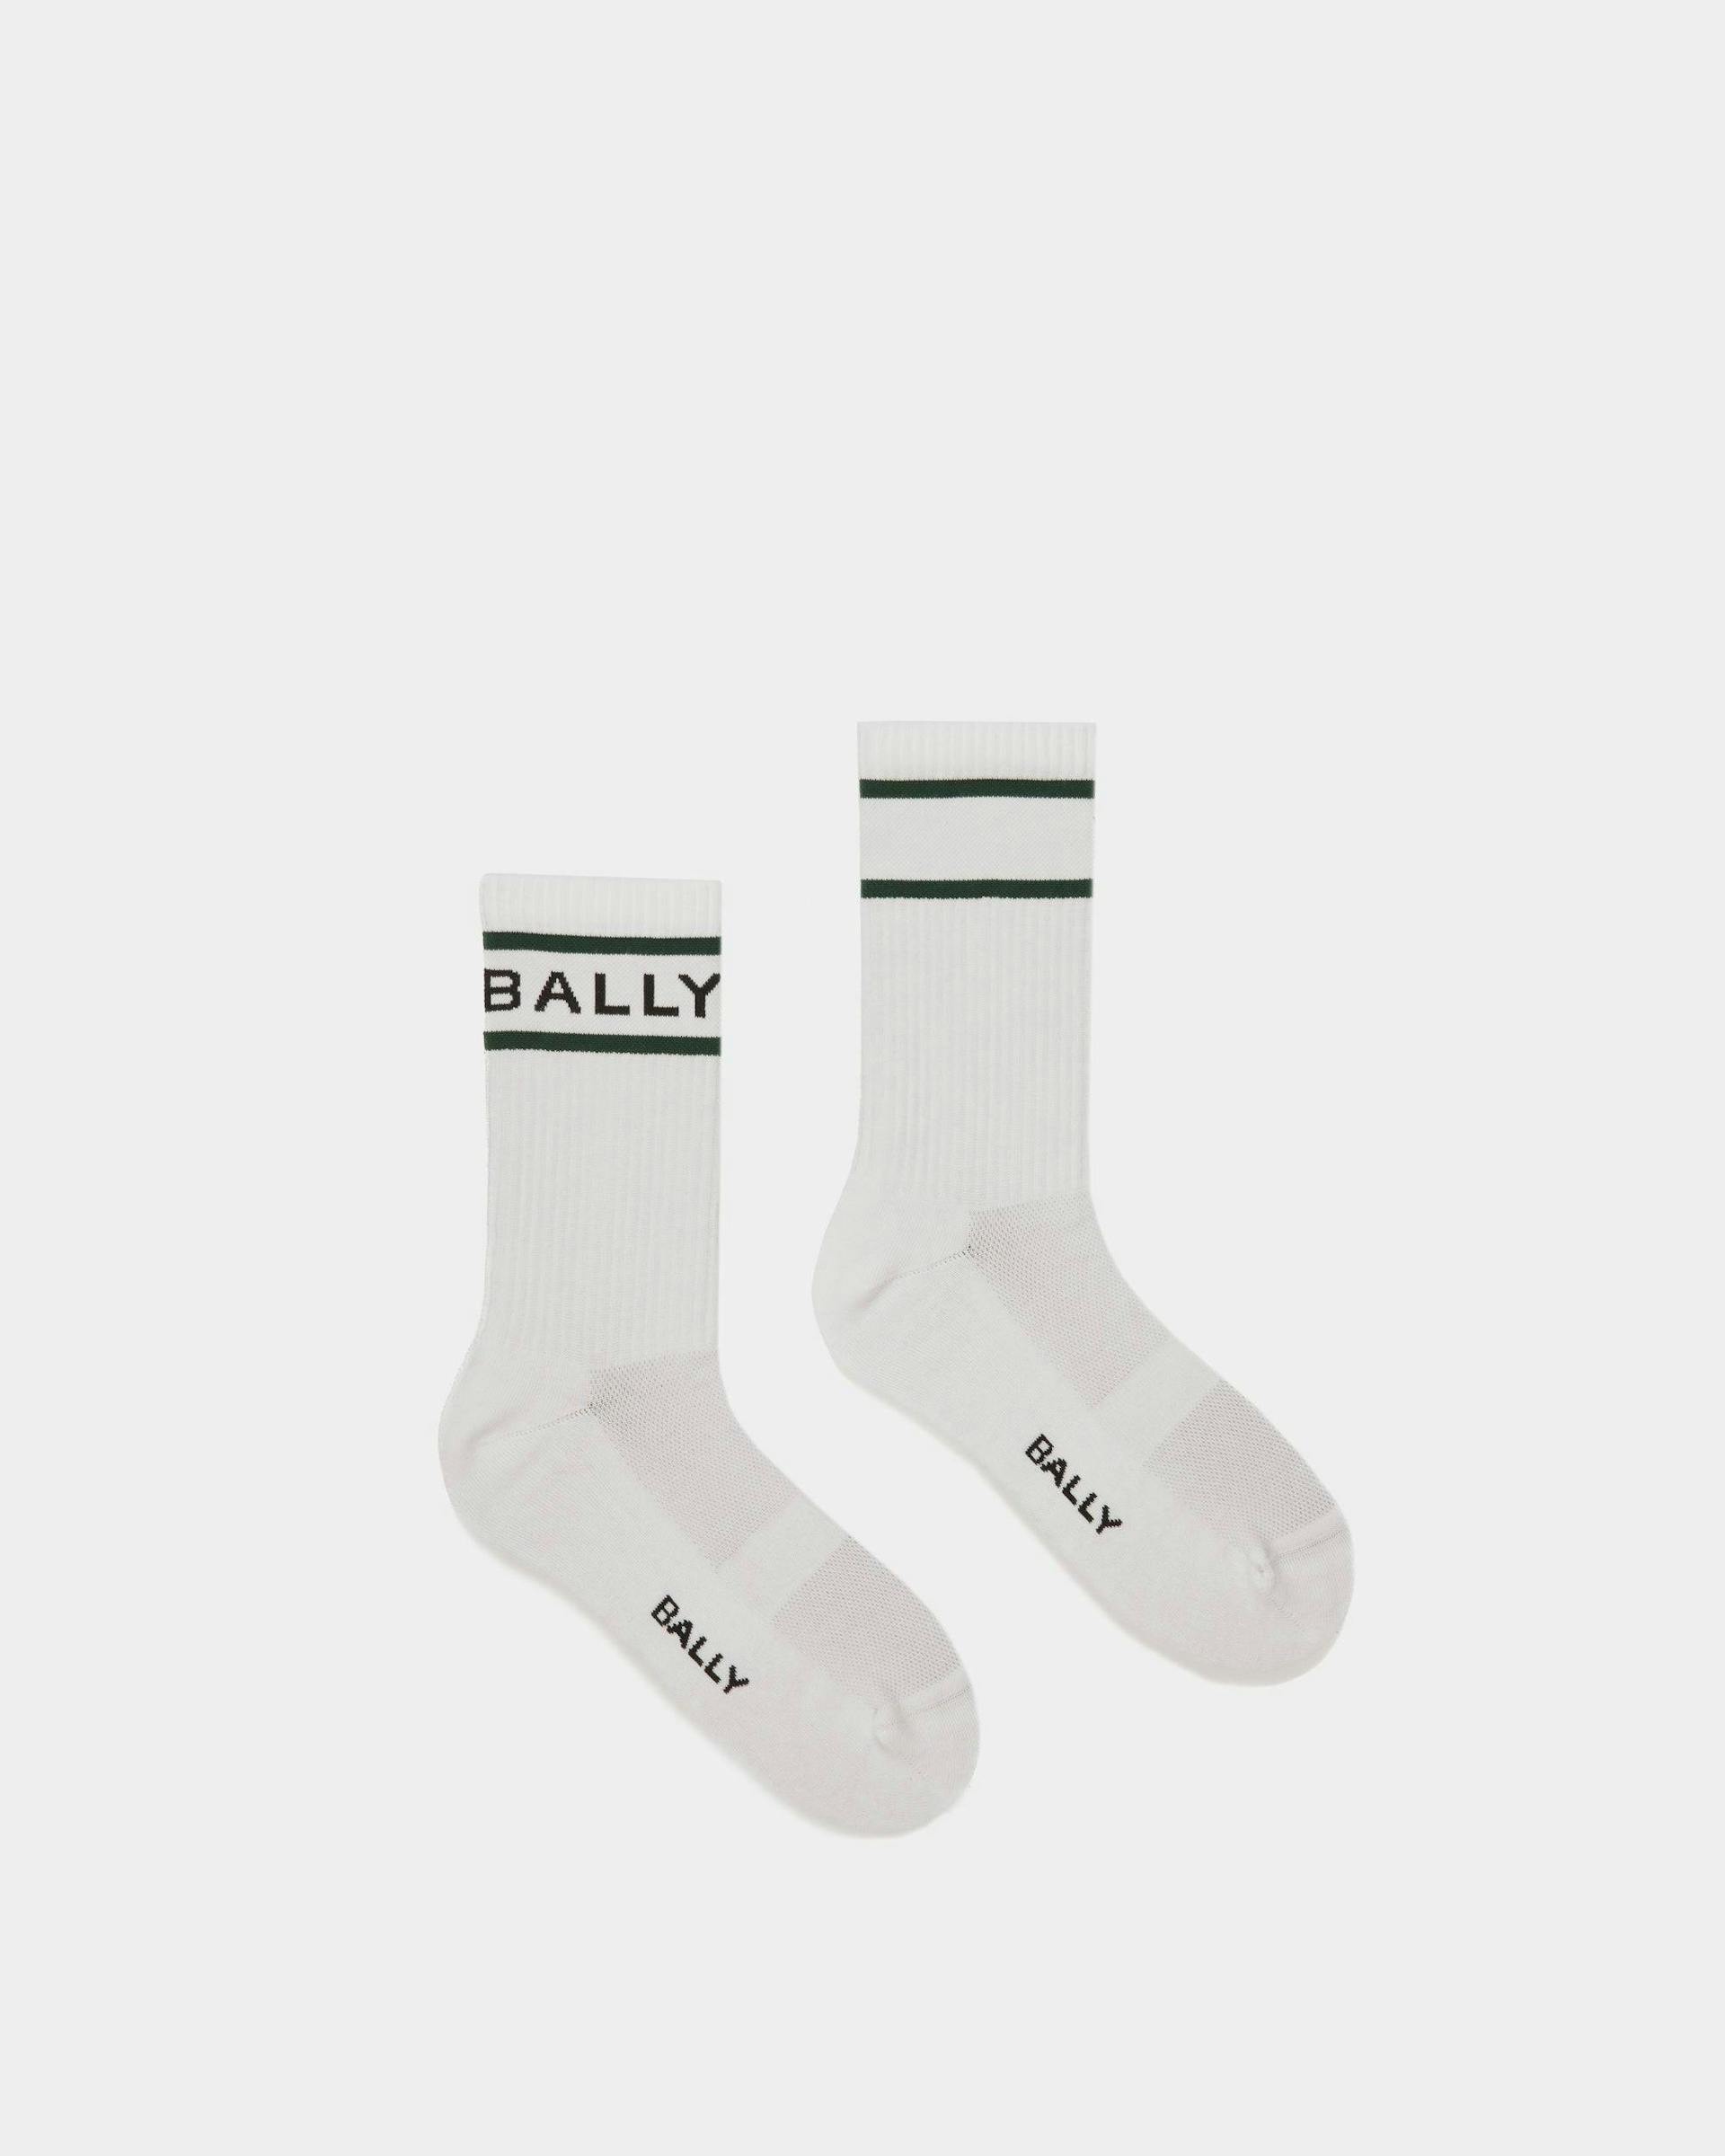 Bally Stripe ソックス ホワイト＆グリーン - 男性 - Bally - 01